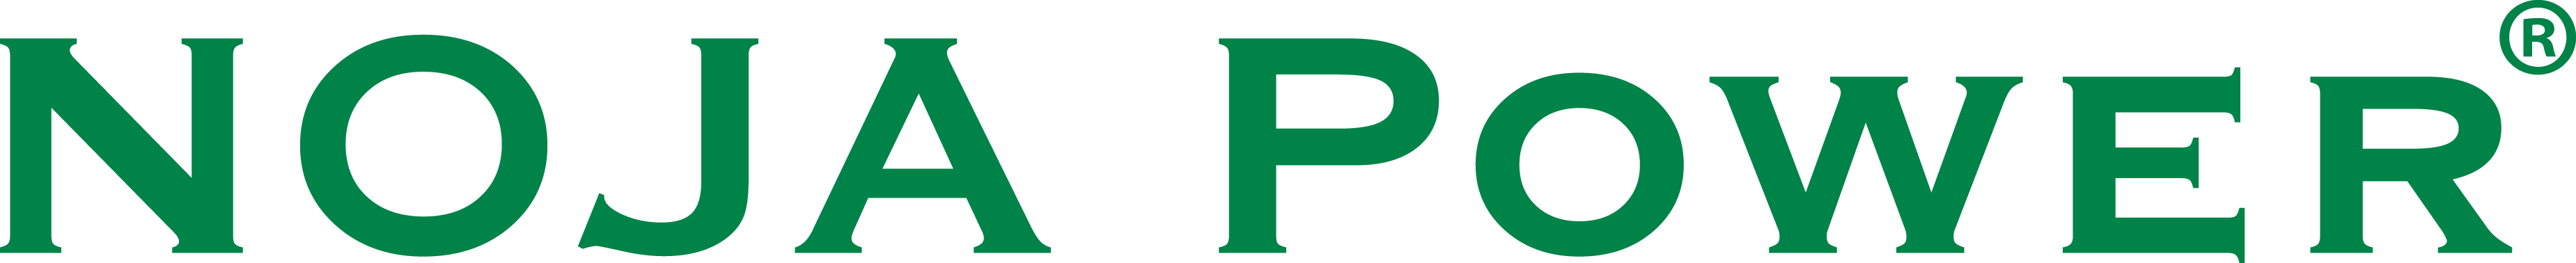 NOJA-Power-Logo-2016-07-18-2-1